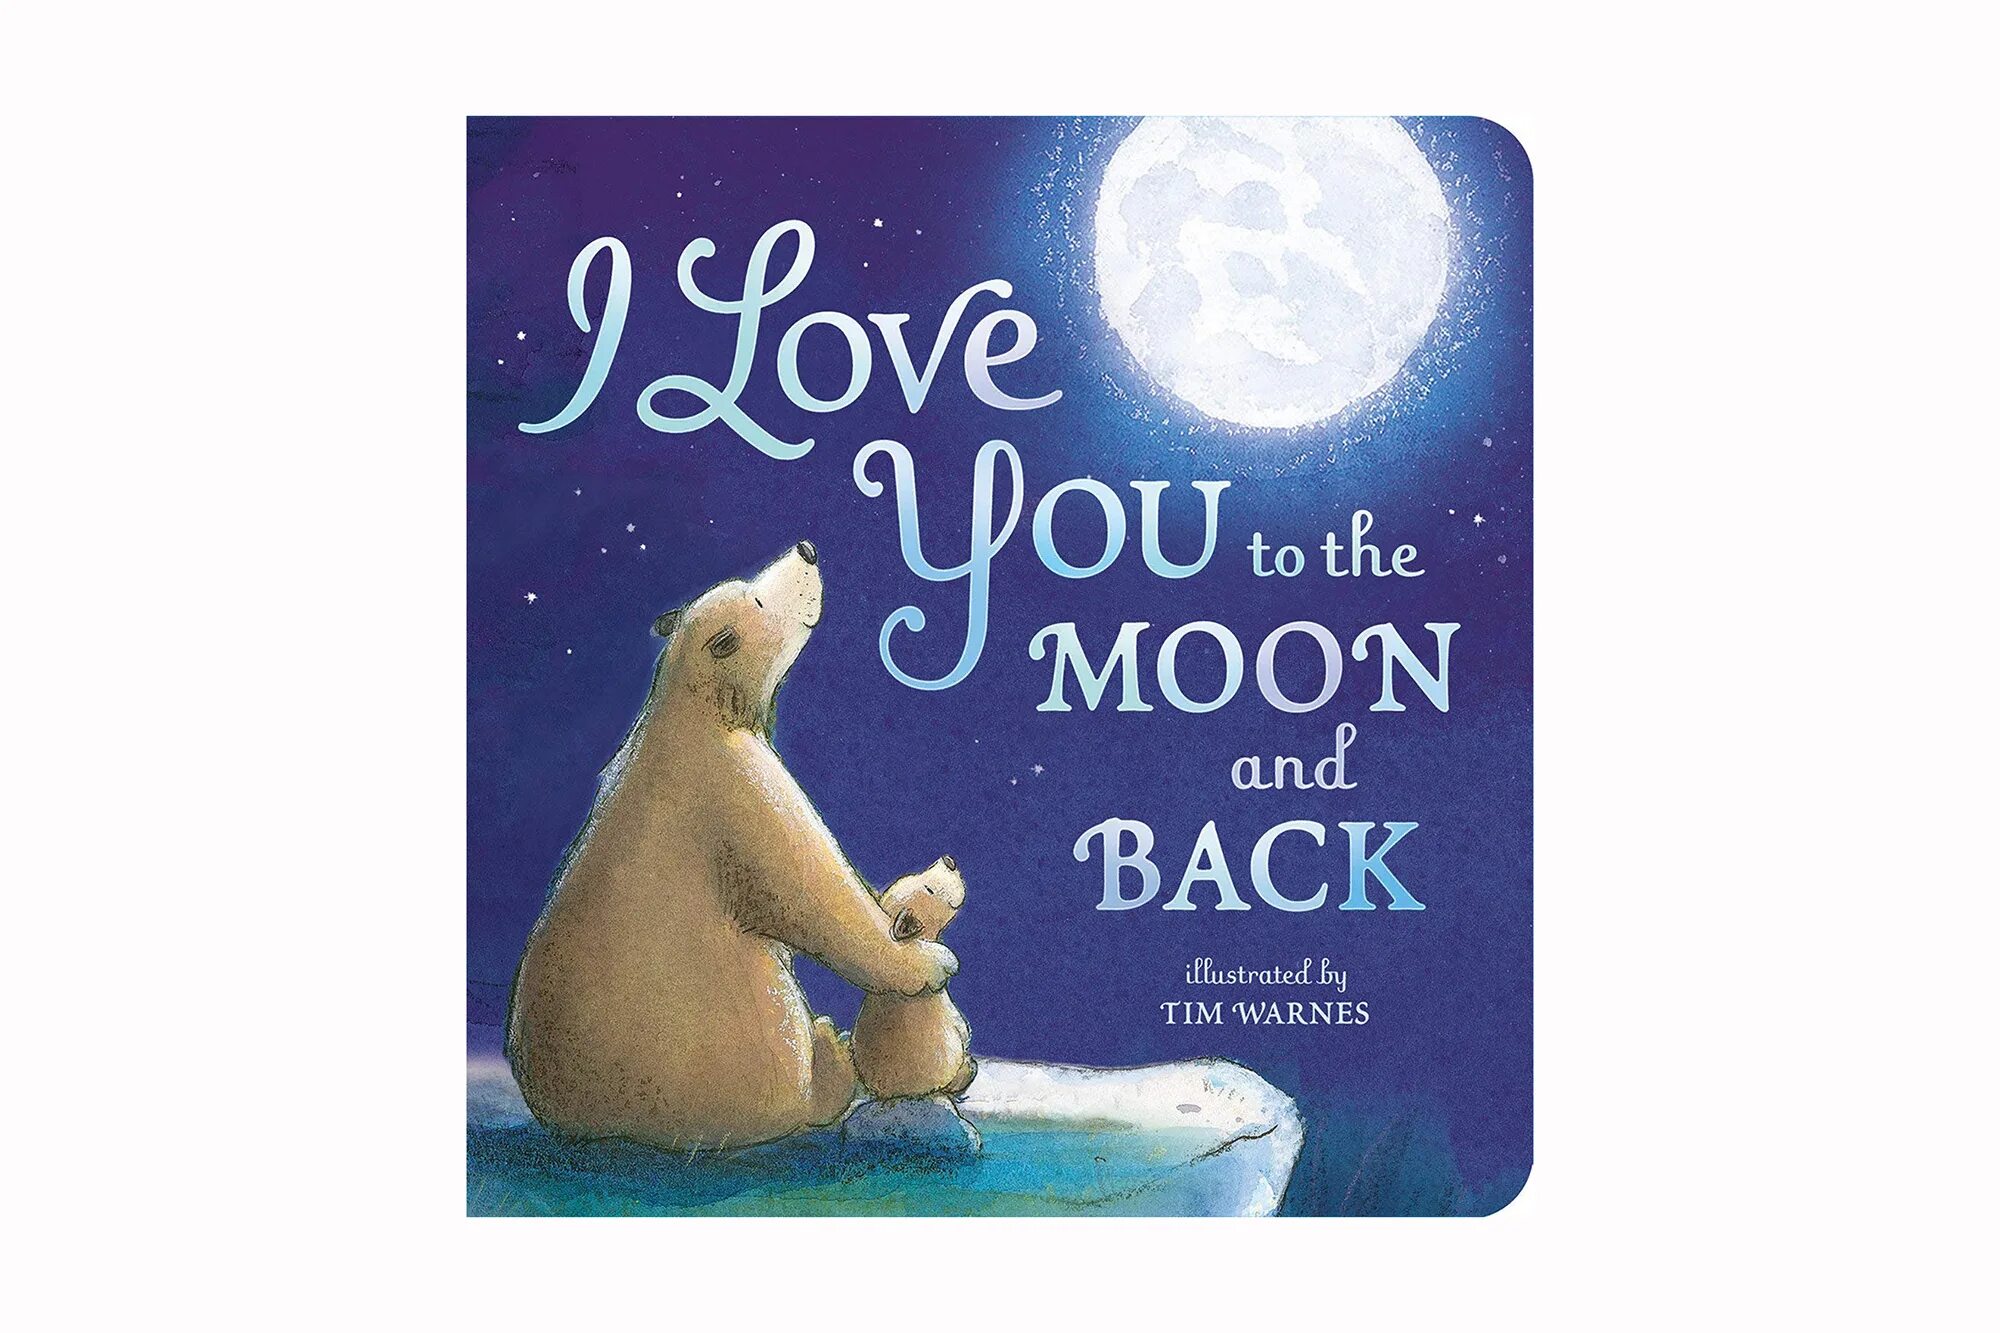 Предложение moon. To the Moon and back. I Love to the Moon and back. "The Moon and the Penny" книга. I Love you to the Moon and back картинка.